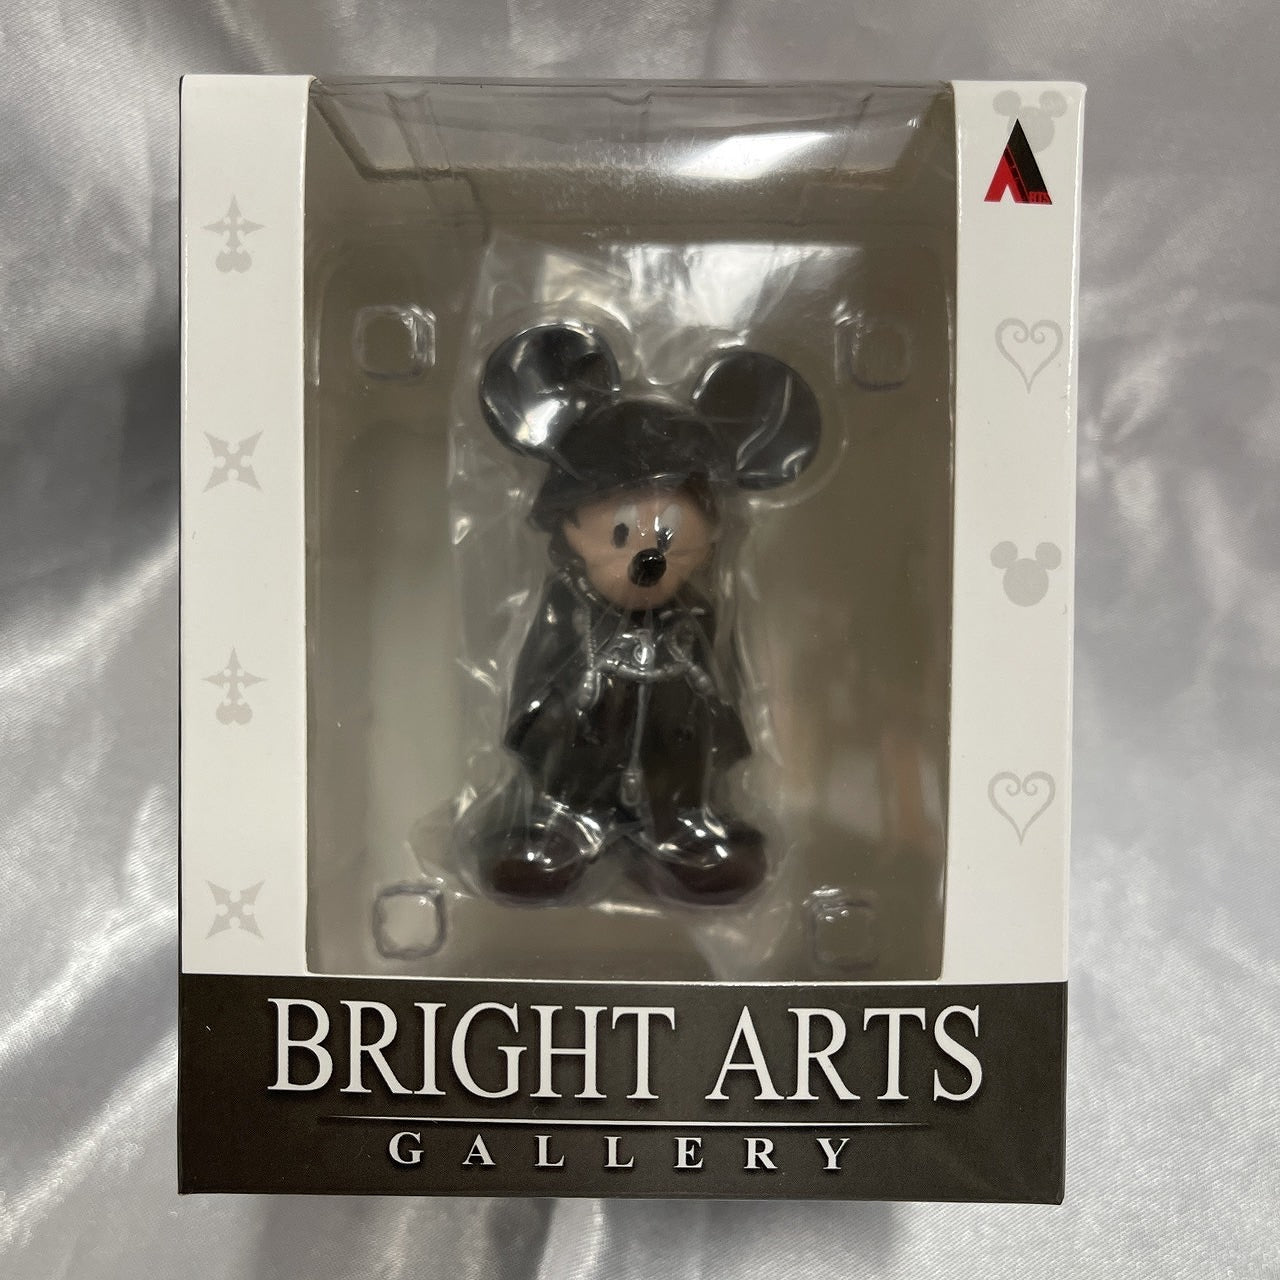 Kingdom Hearts II Bright Arts Gallery The King Metal Figure